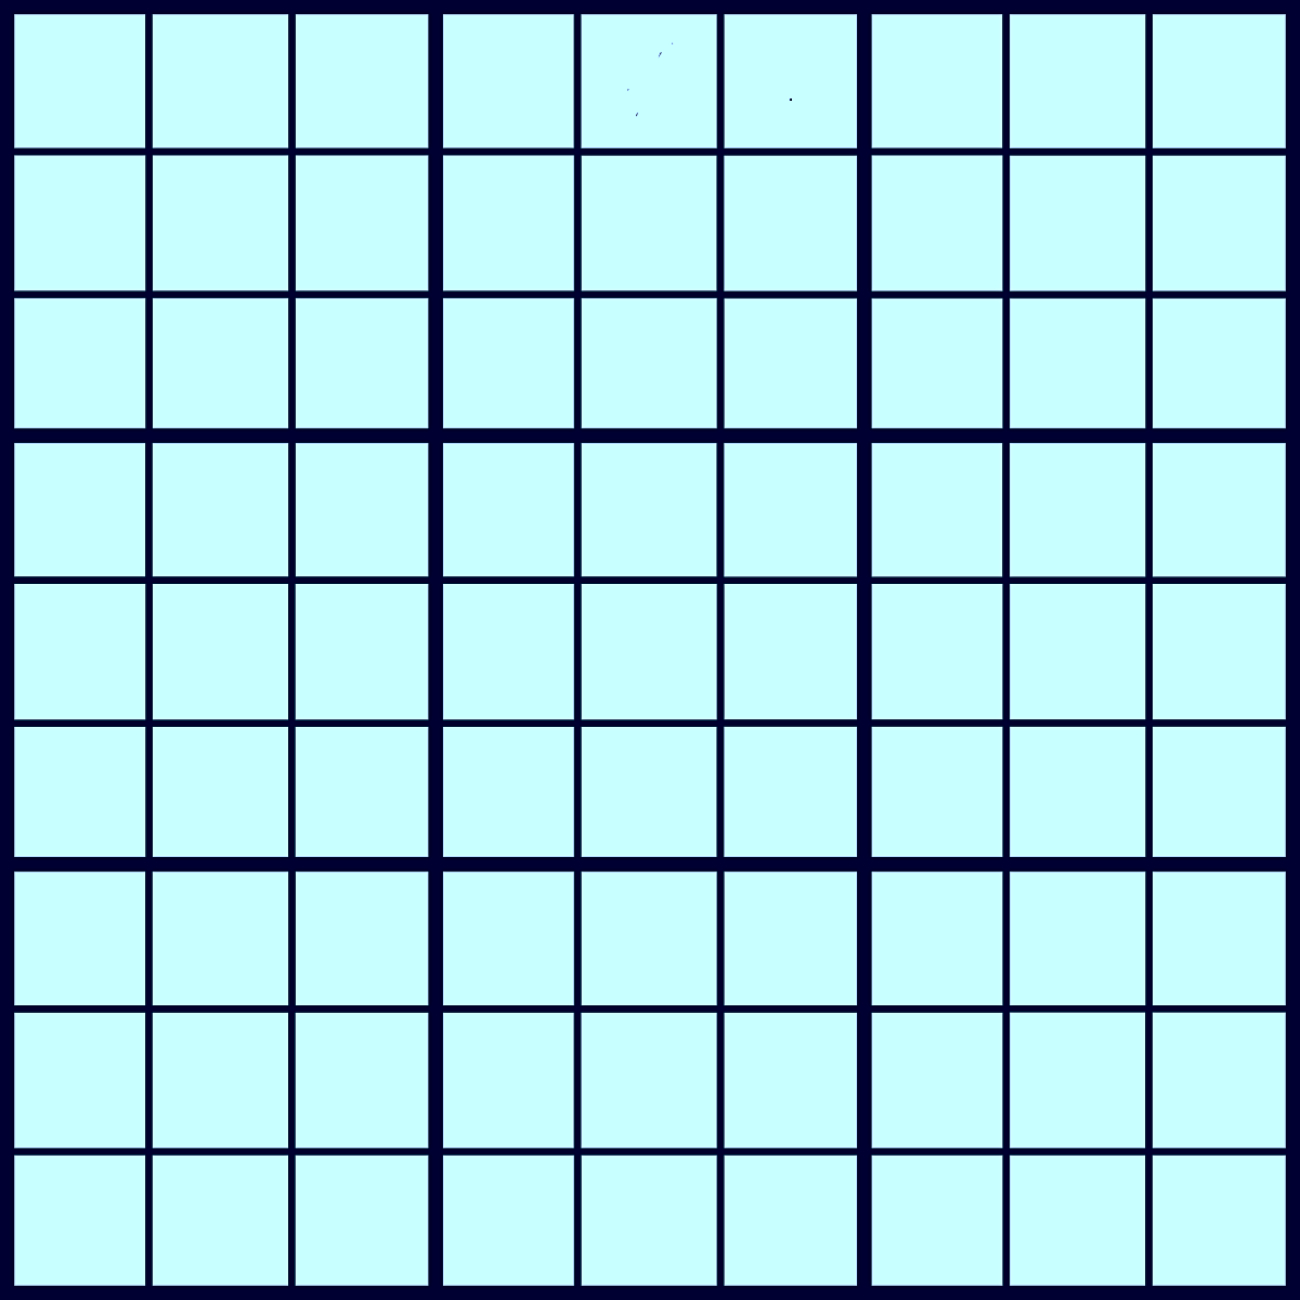 free blank sudoku puzzles 9x9 grid